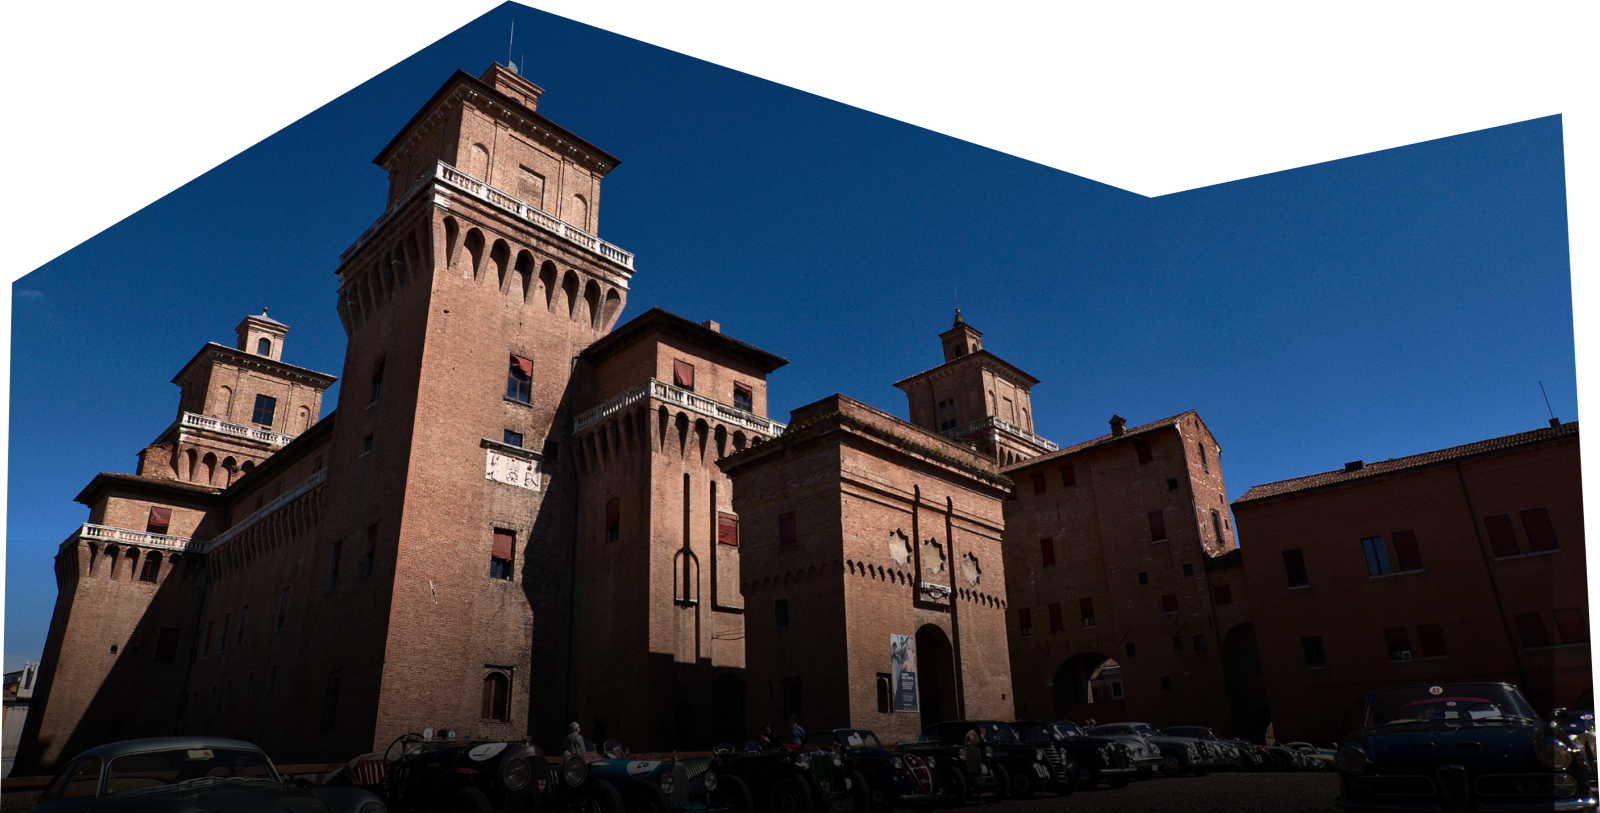 The castle of Ferrara, Italy